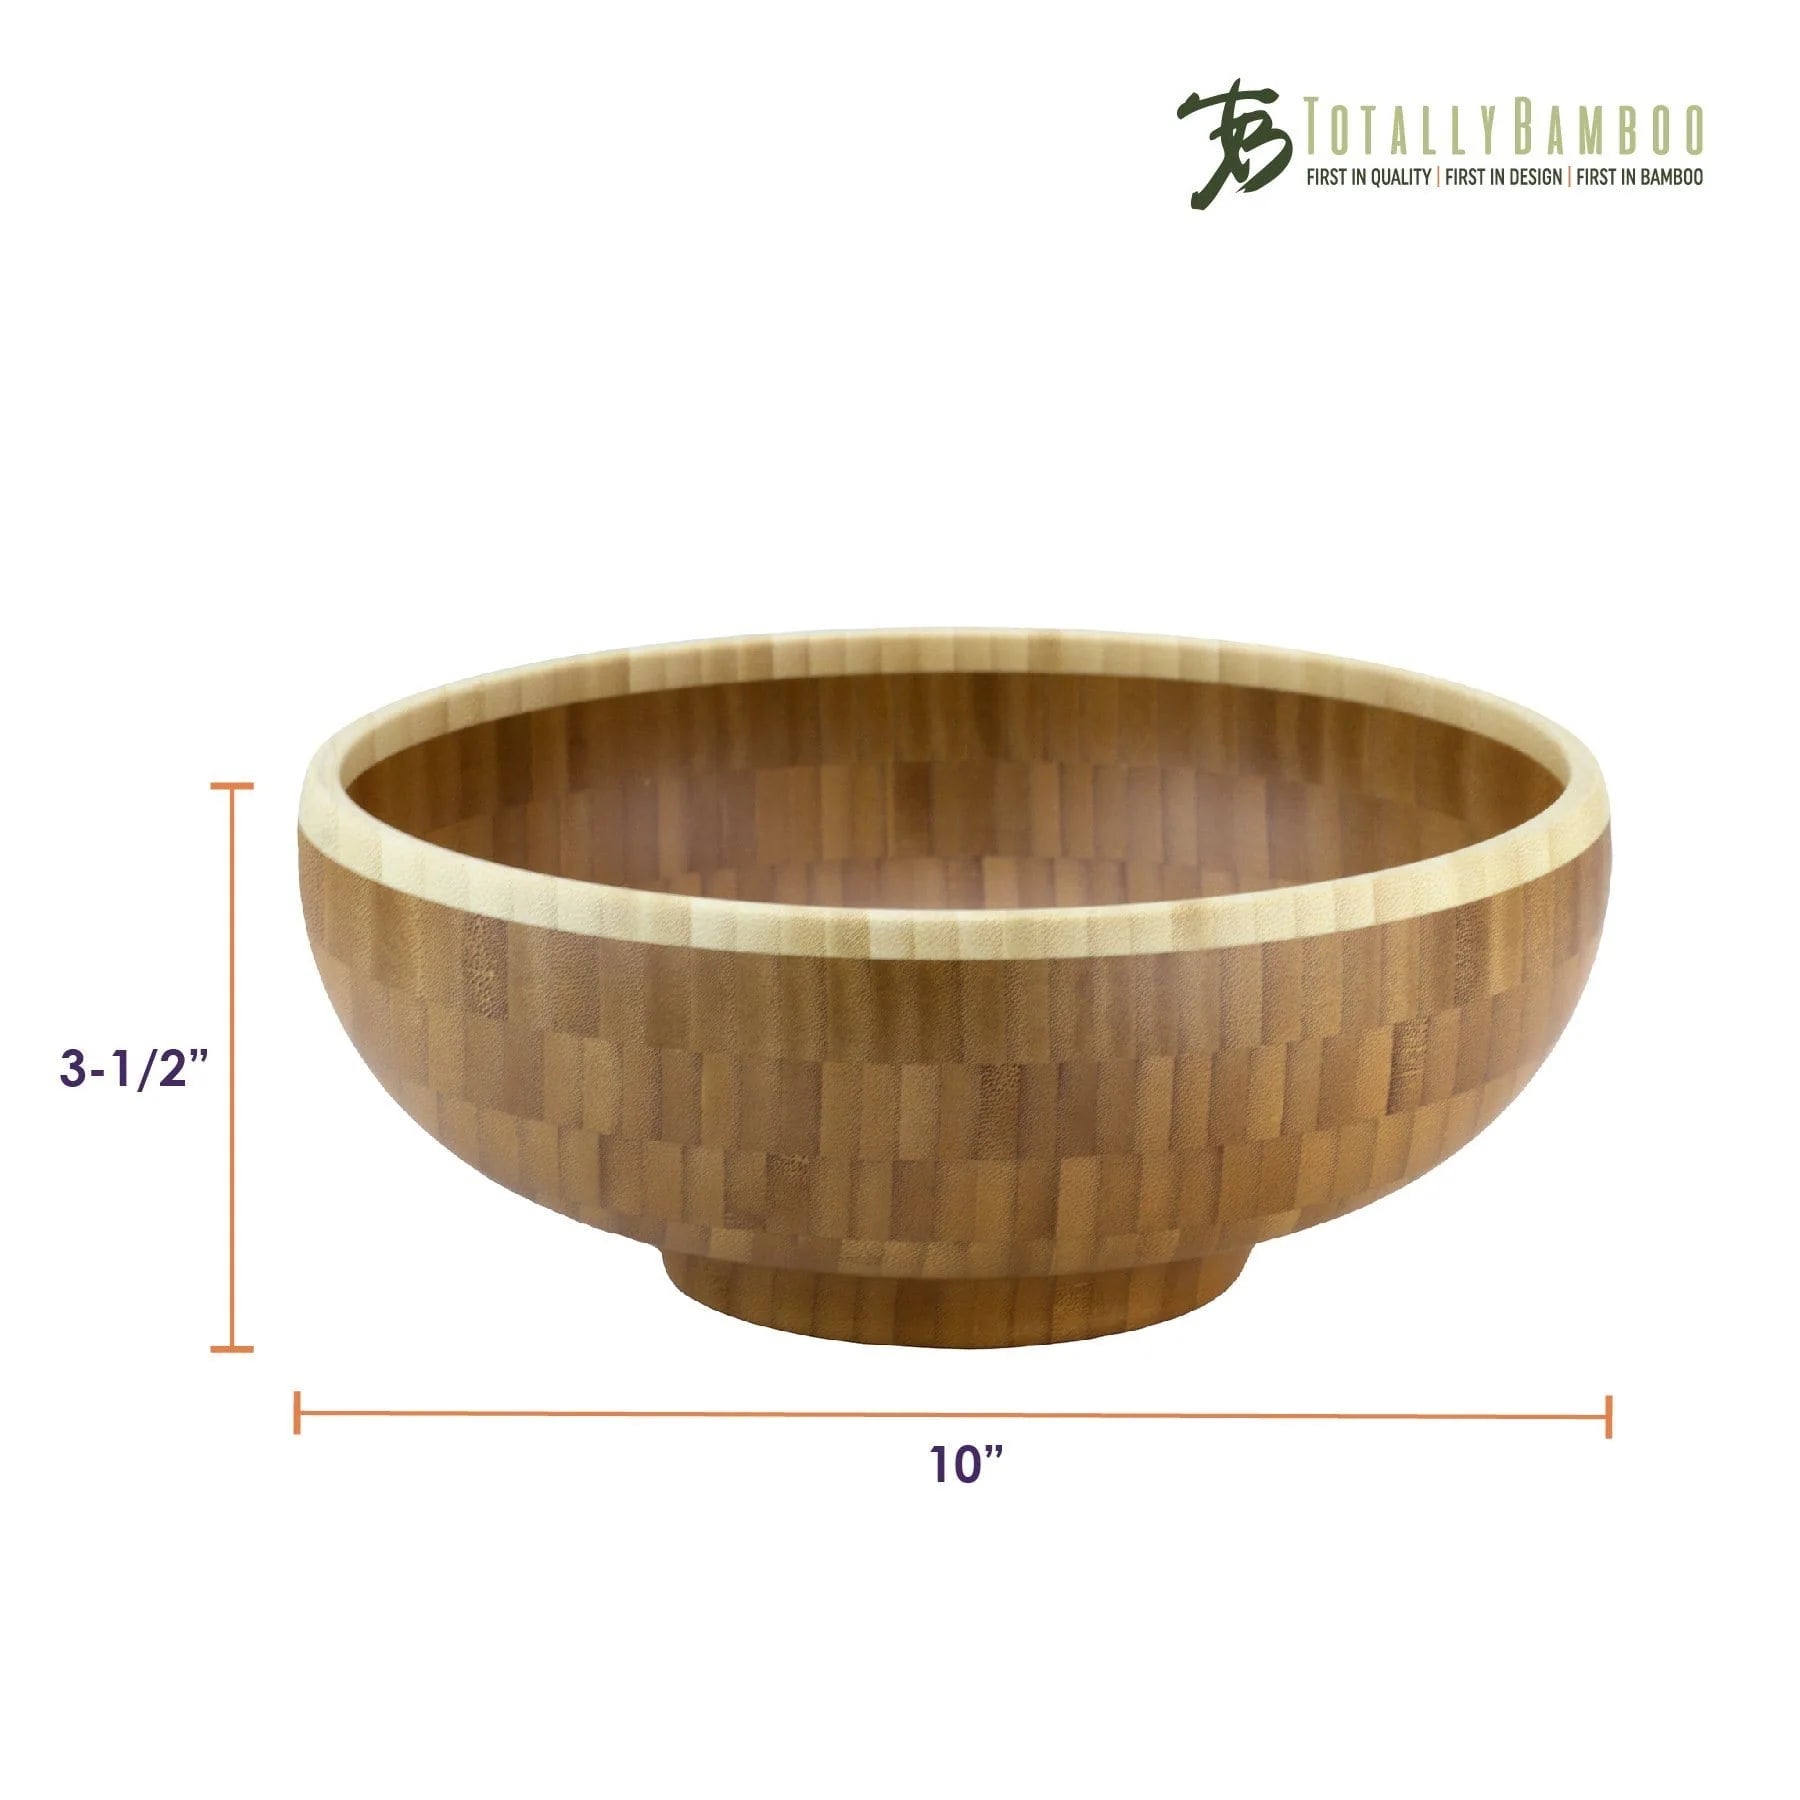 Totally Bamboo Classic Medium Bamboo Serving Bowl – 10"Dia. x 3-1/2"